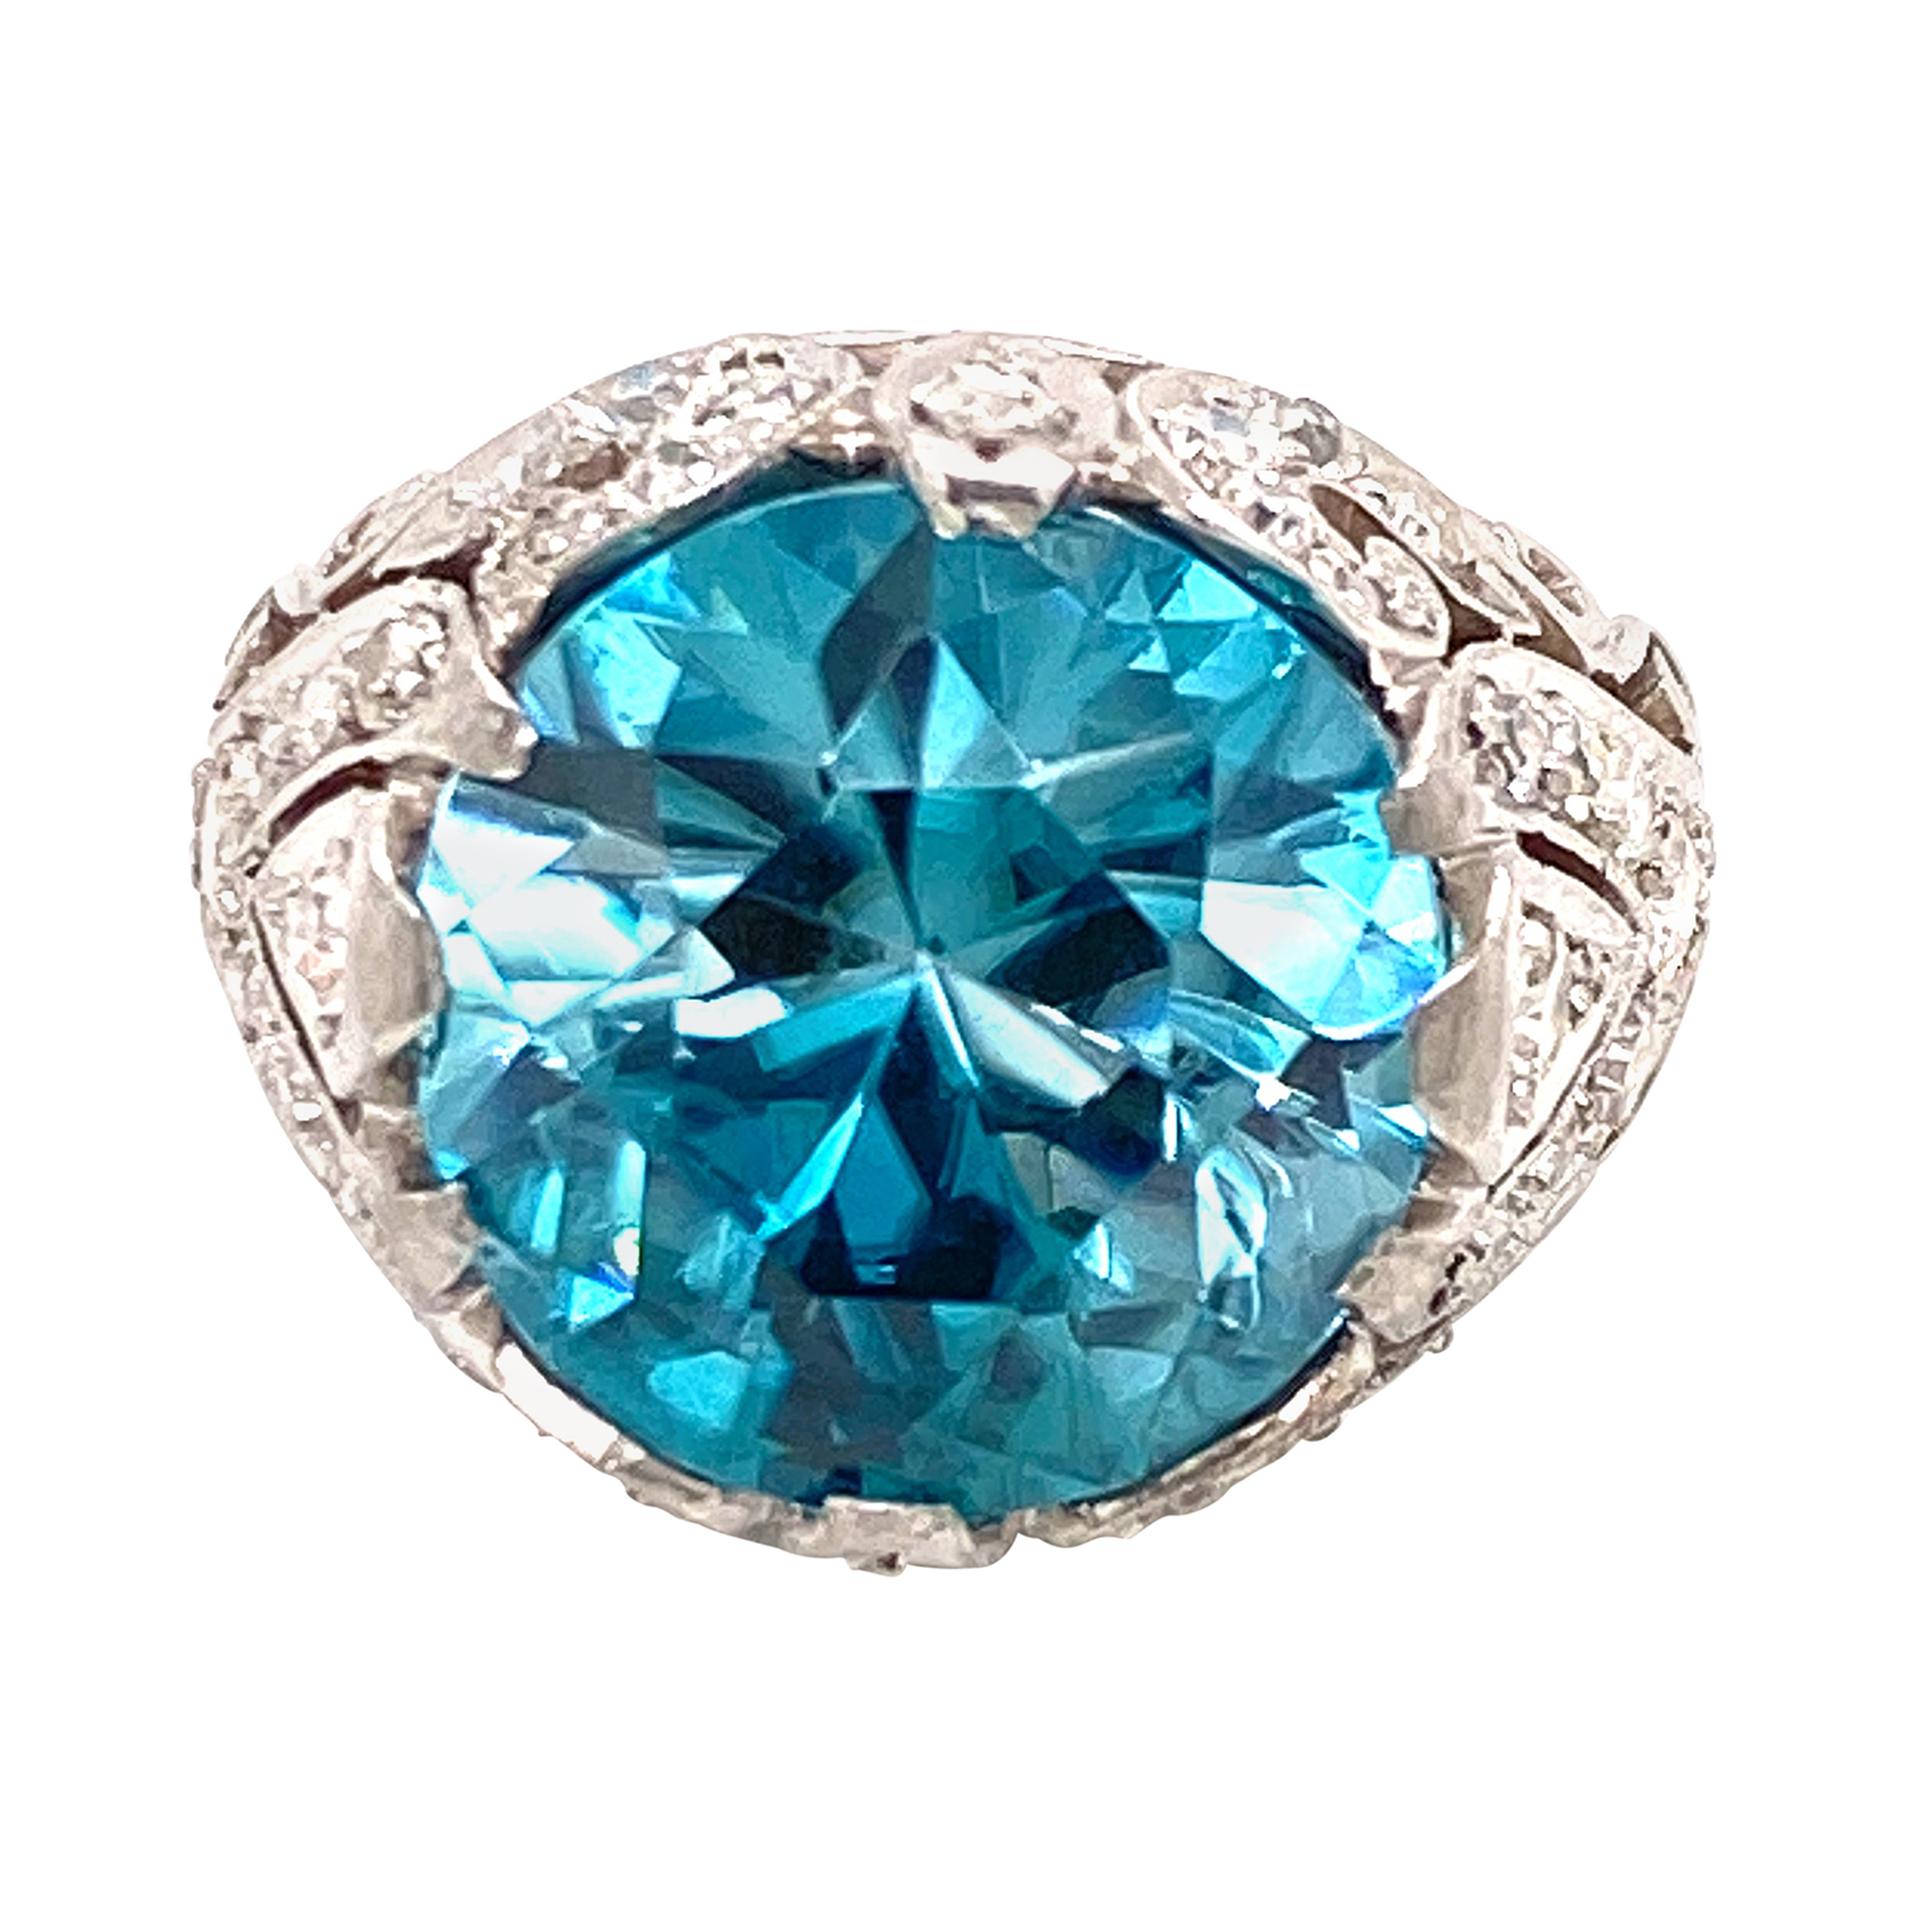 Rare No Heat 11 Carat Blue Zircon Diamond Vintage Estate Ring